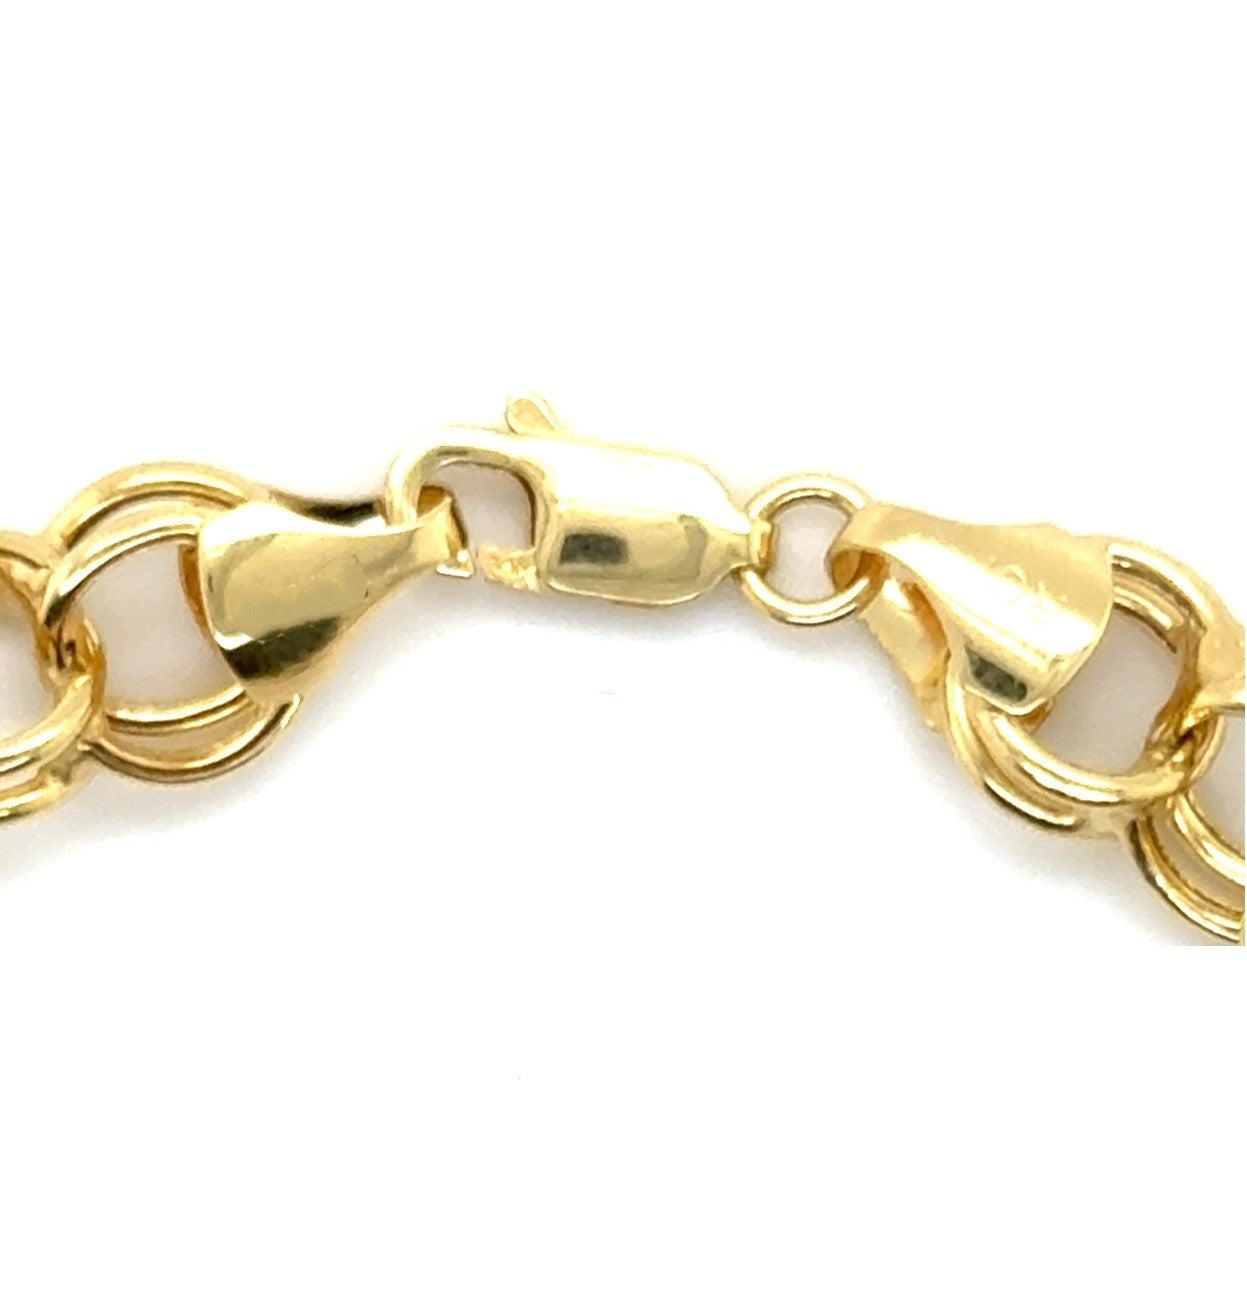 14k yellow gold charm link chain bracelet